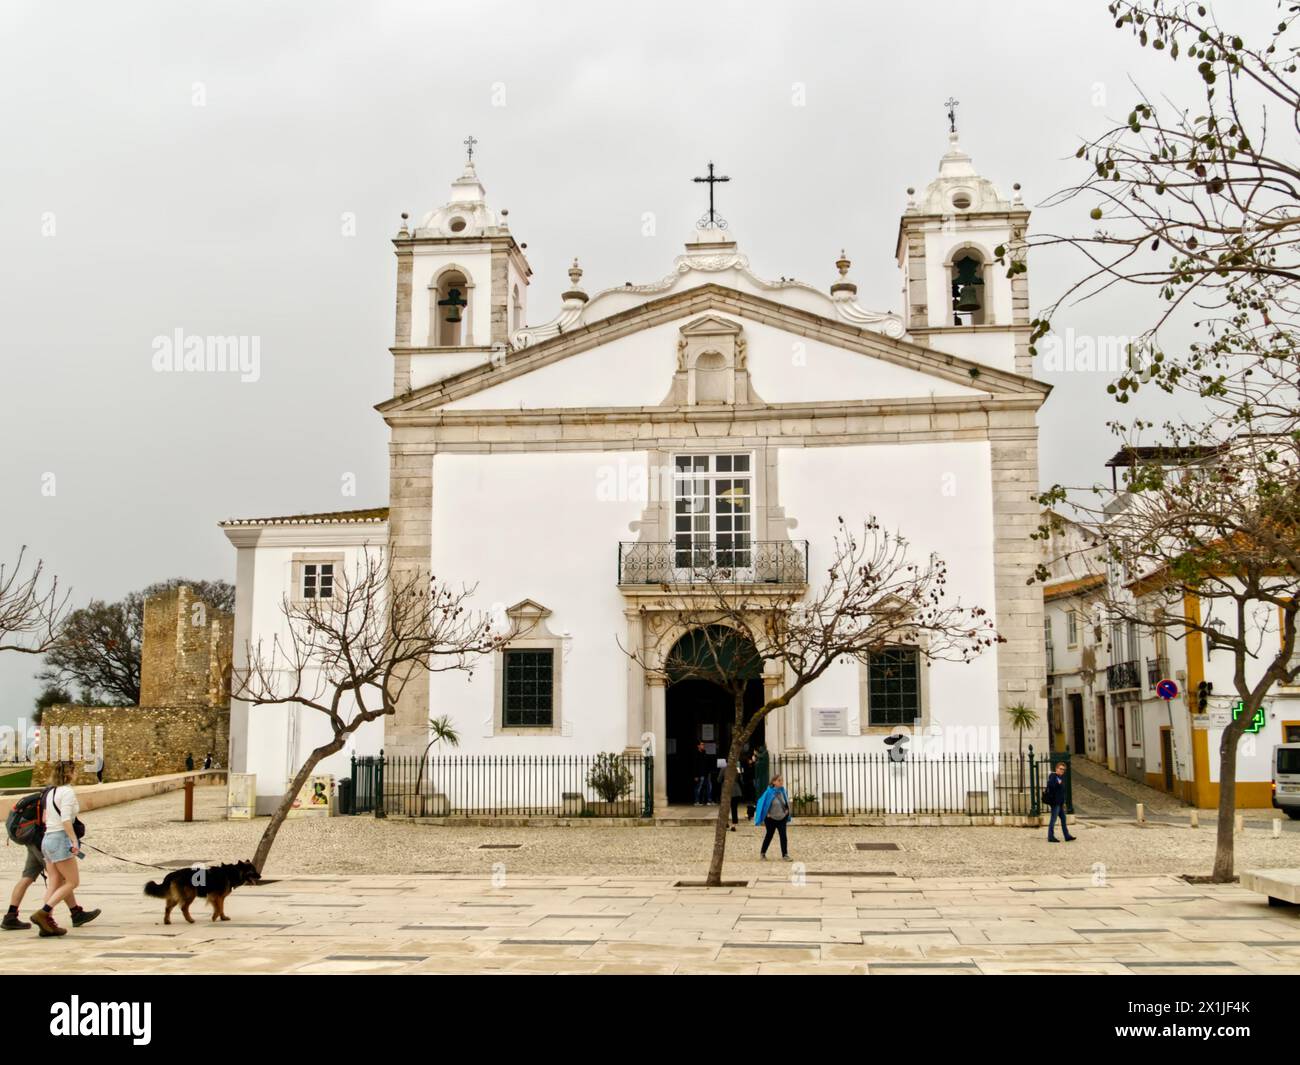 Igreja de Santa Maria, church of St Mary, Lagos,Algarve, Portugal, Europe Stock Photo